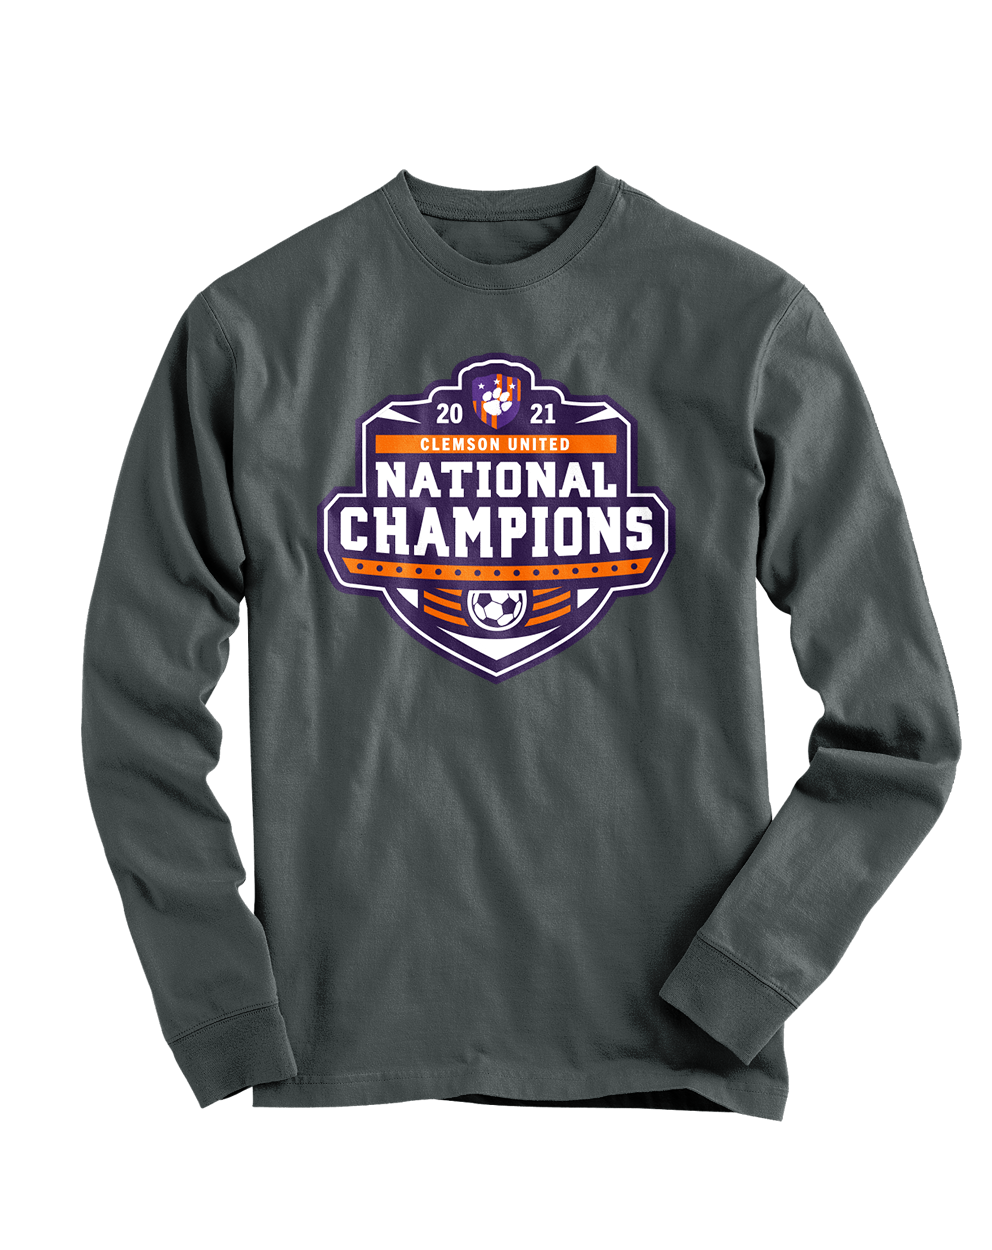 2021 National Champions Clemson United Adult Long Sleeve Tee